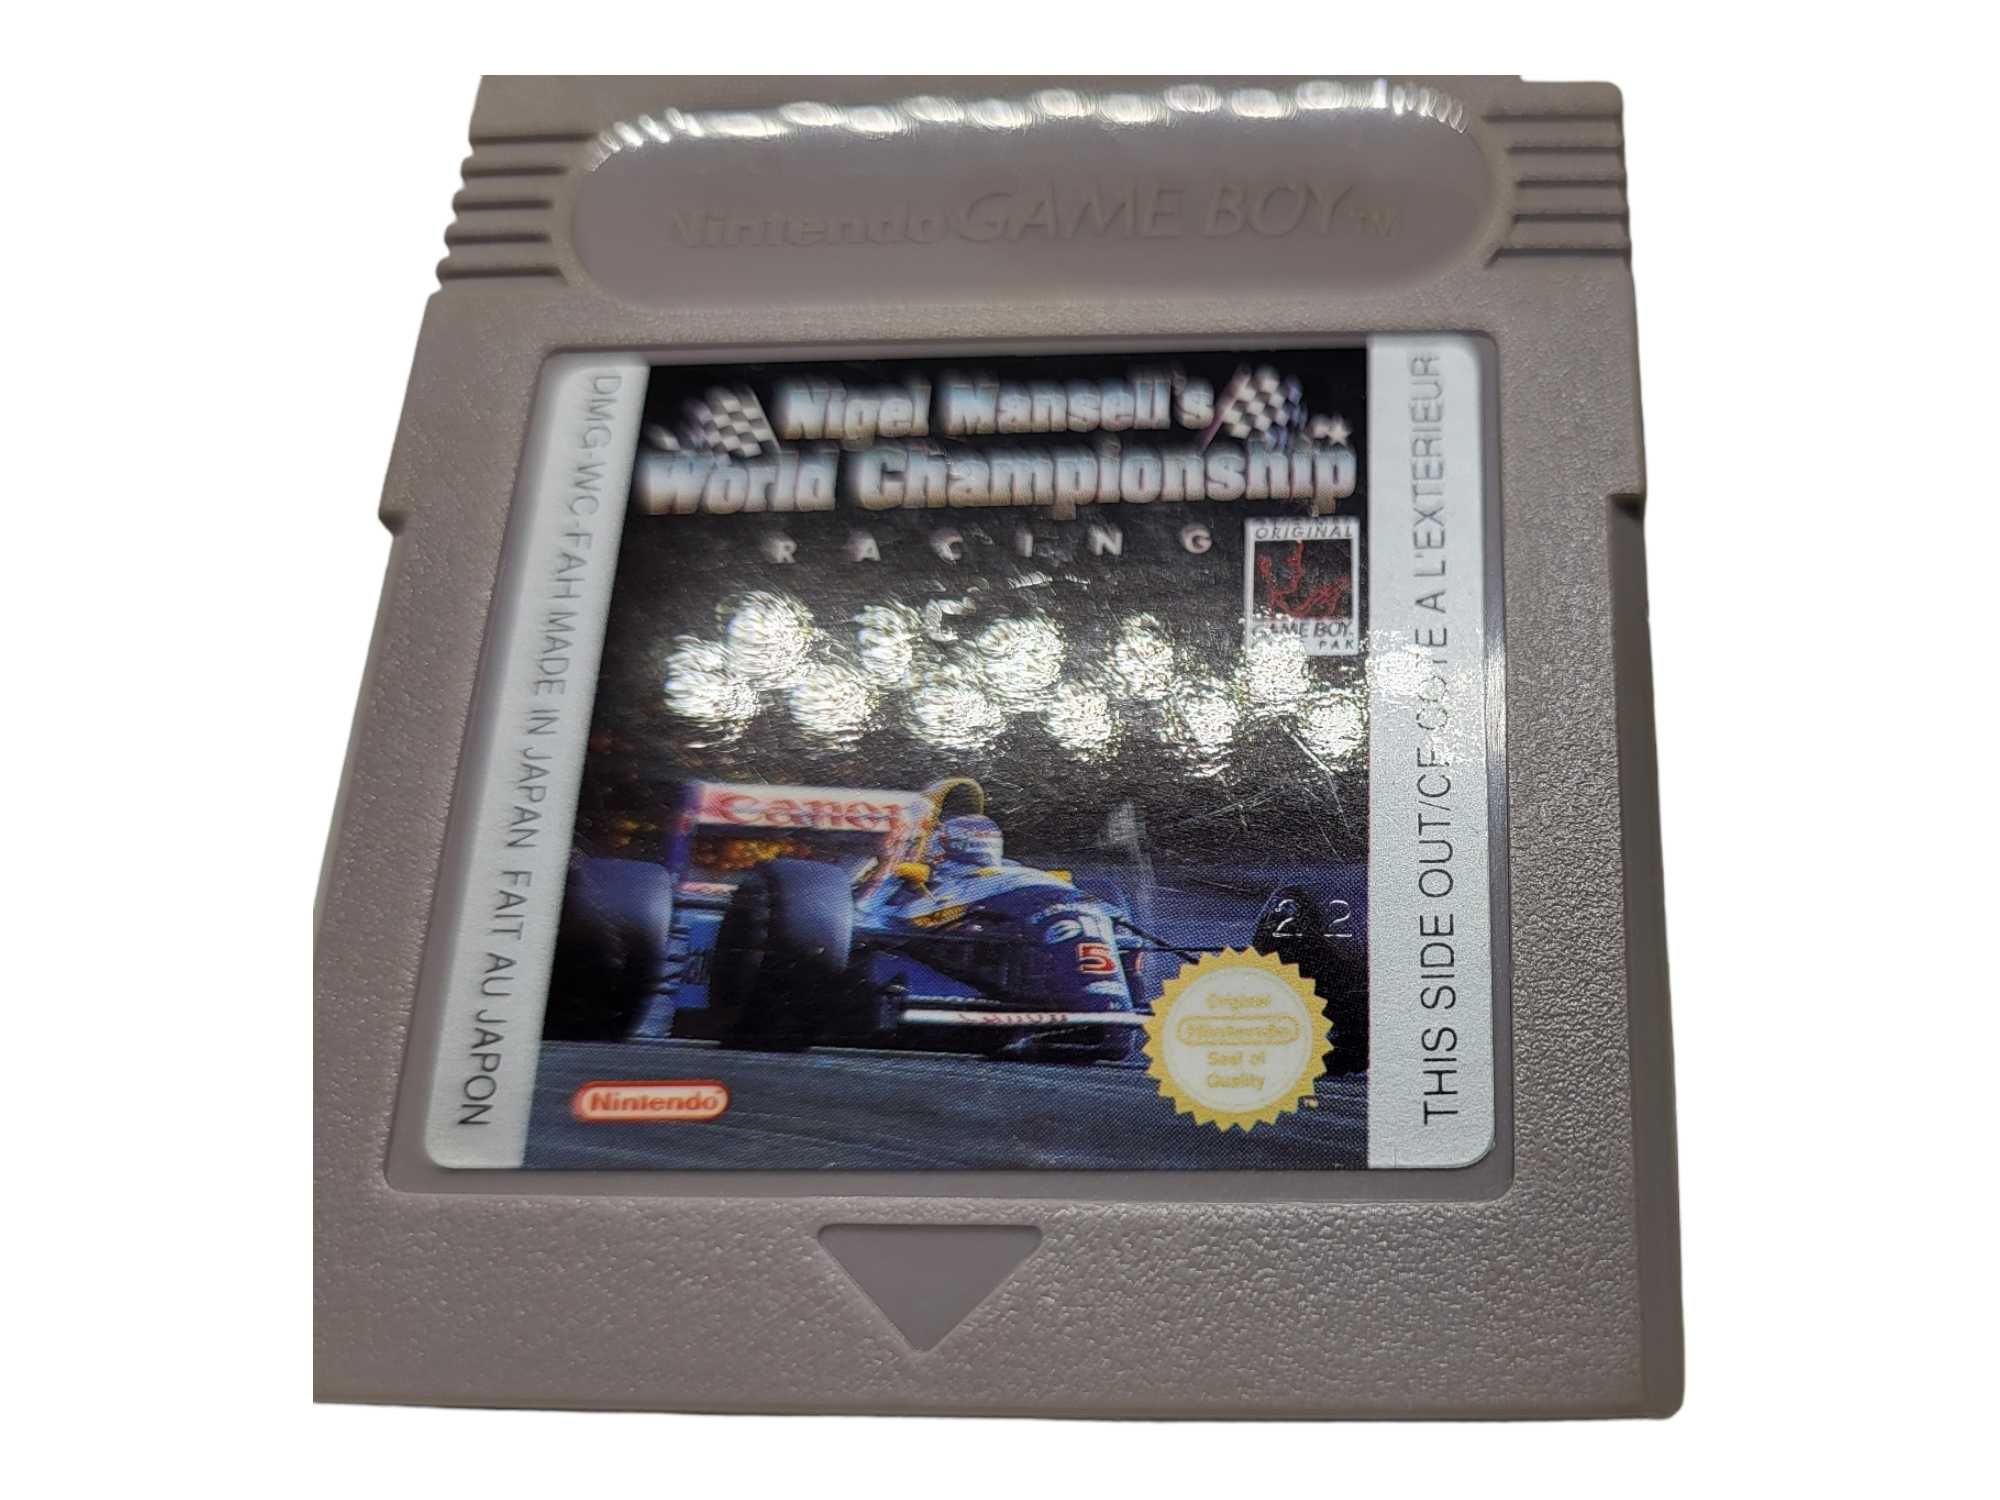 Nigel Mansell's World Championship Game Boy Gameboy Classic